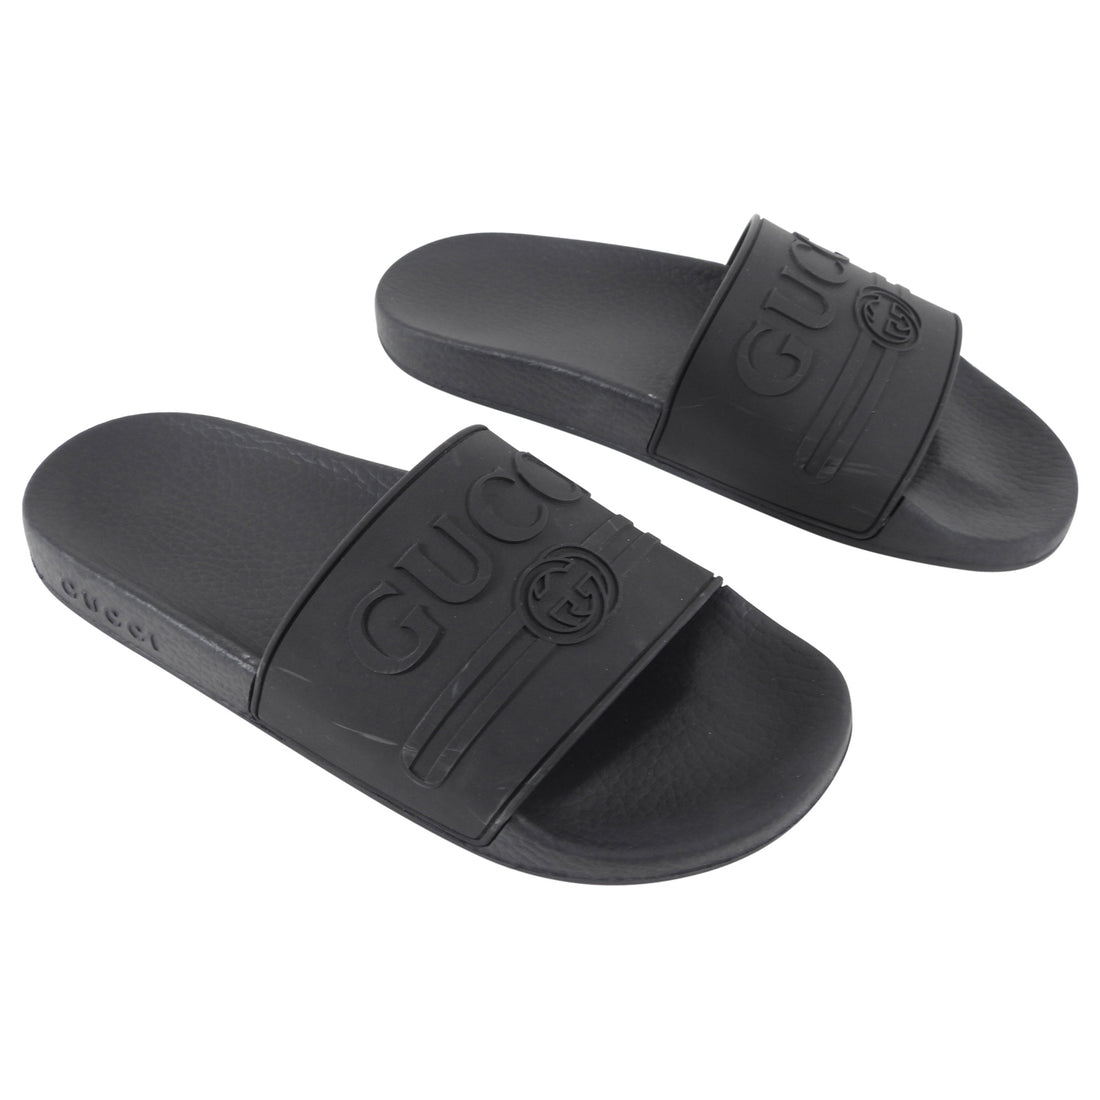 Gucci Rubber Pool Slide Sandals - USA 7